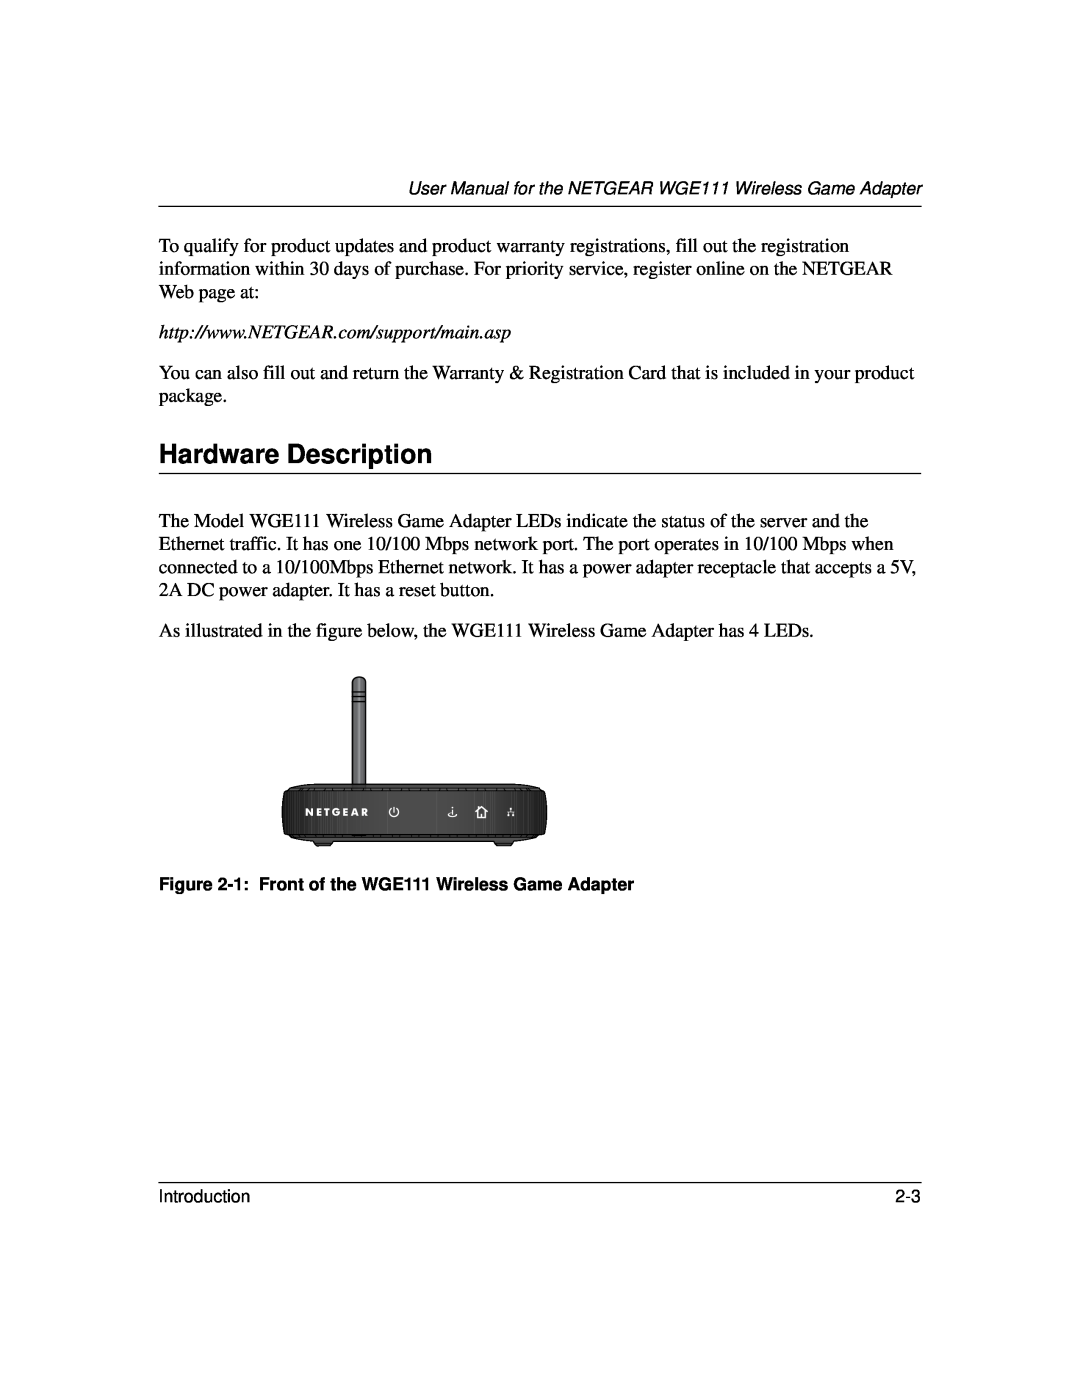 NETGEAR WGE111 user manual Introduction 